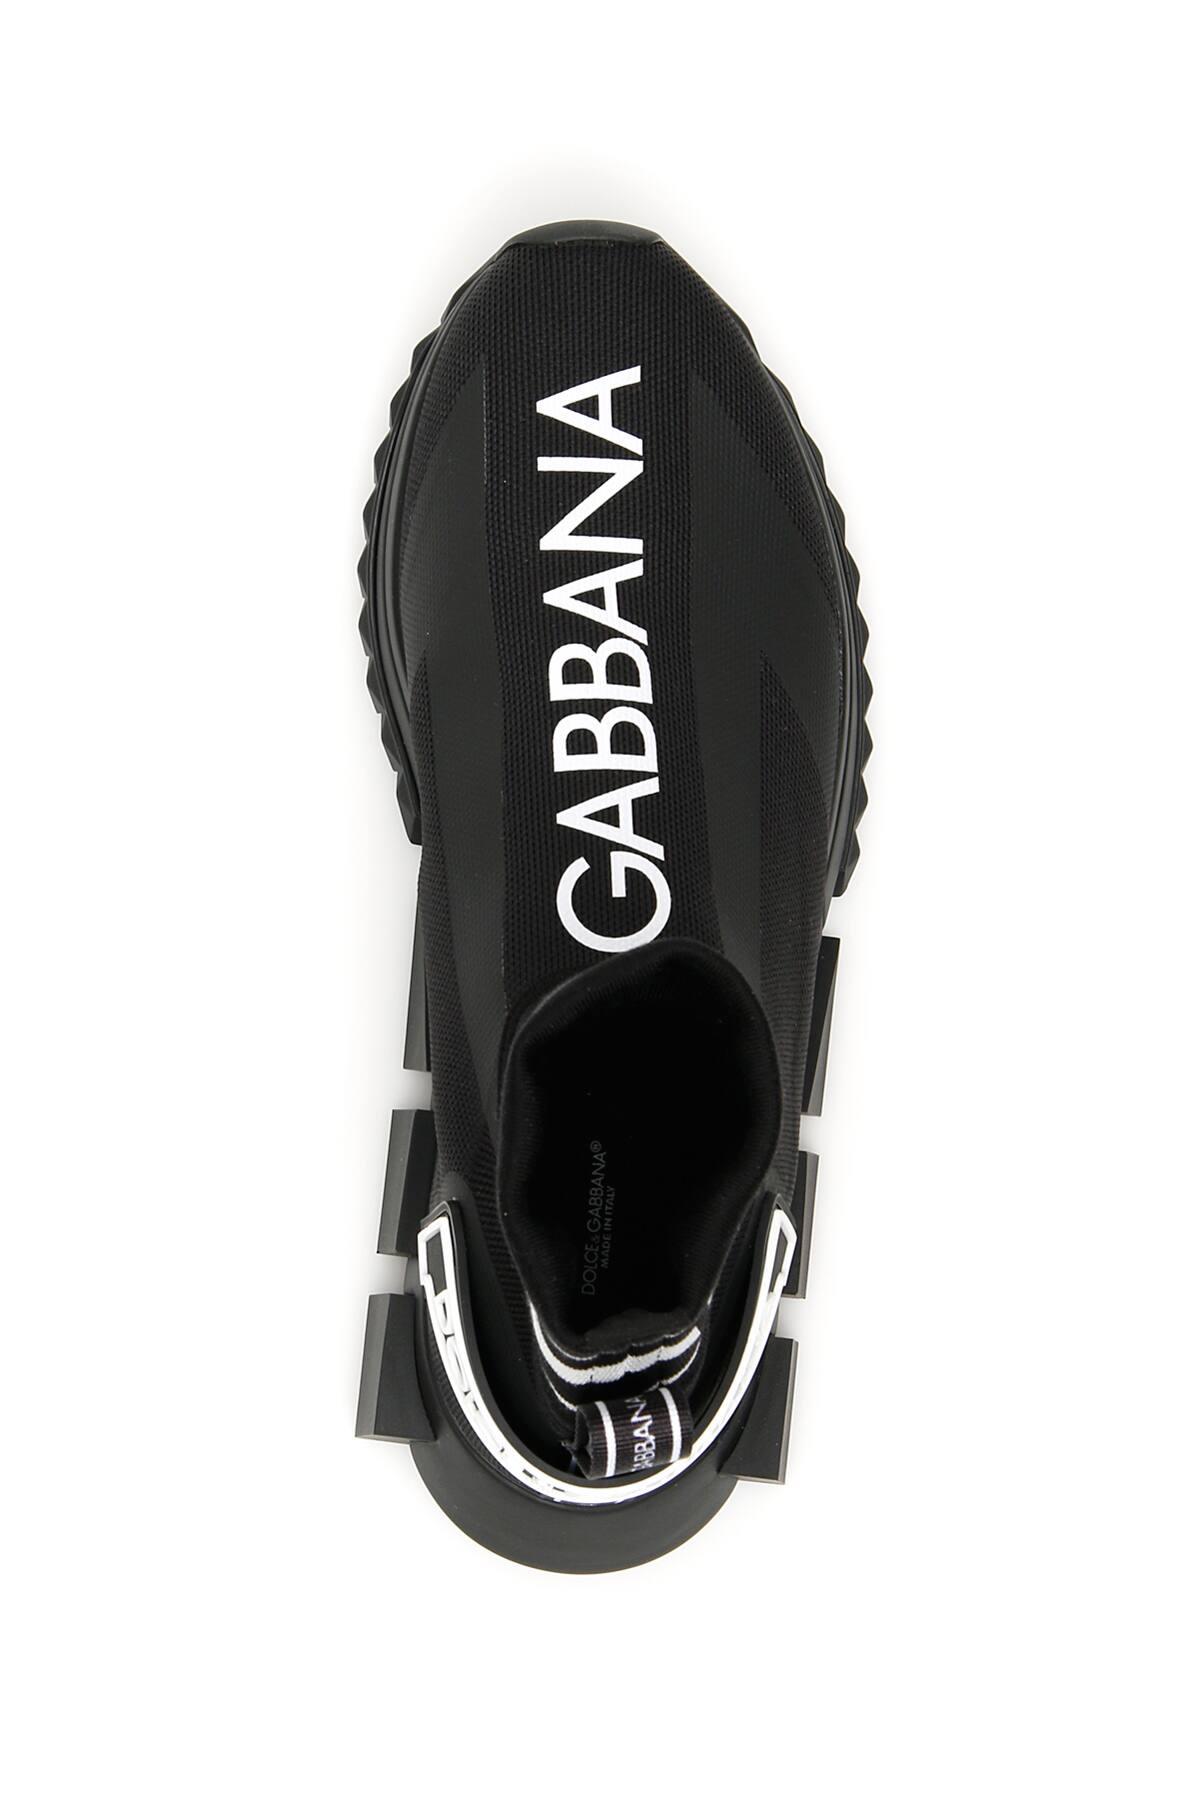 Dolce & Gabbana Rubber Sorrento Running Sneakers in Black,White (Black